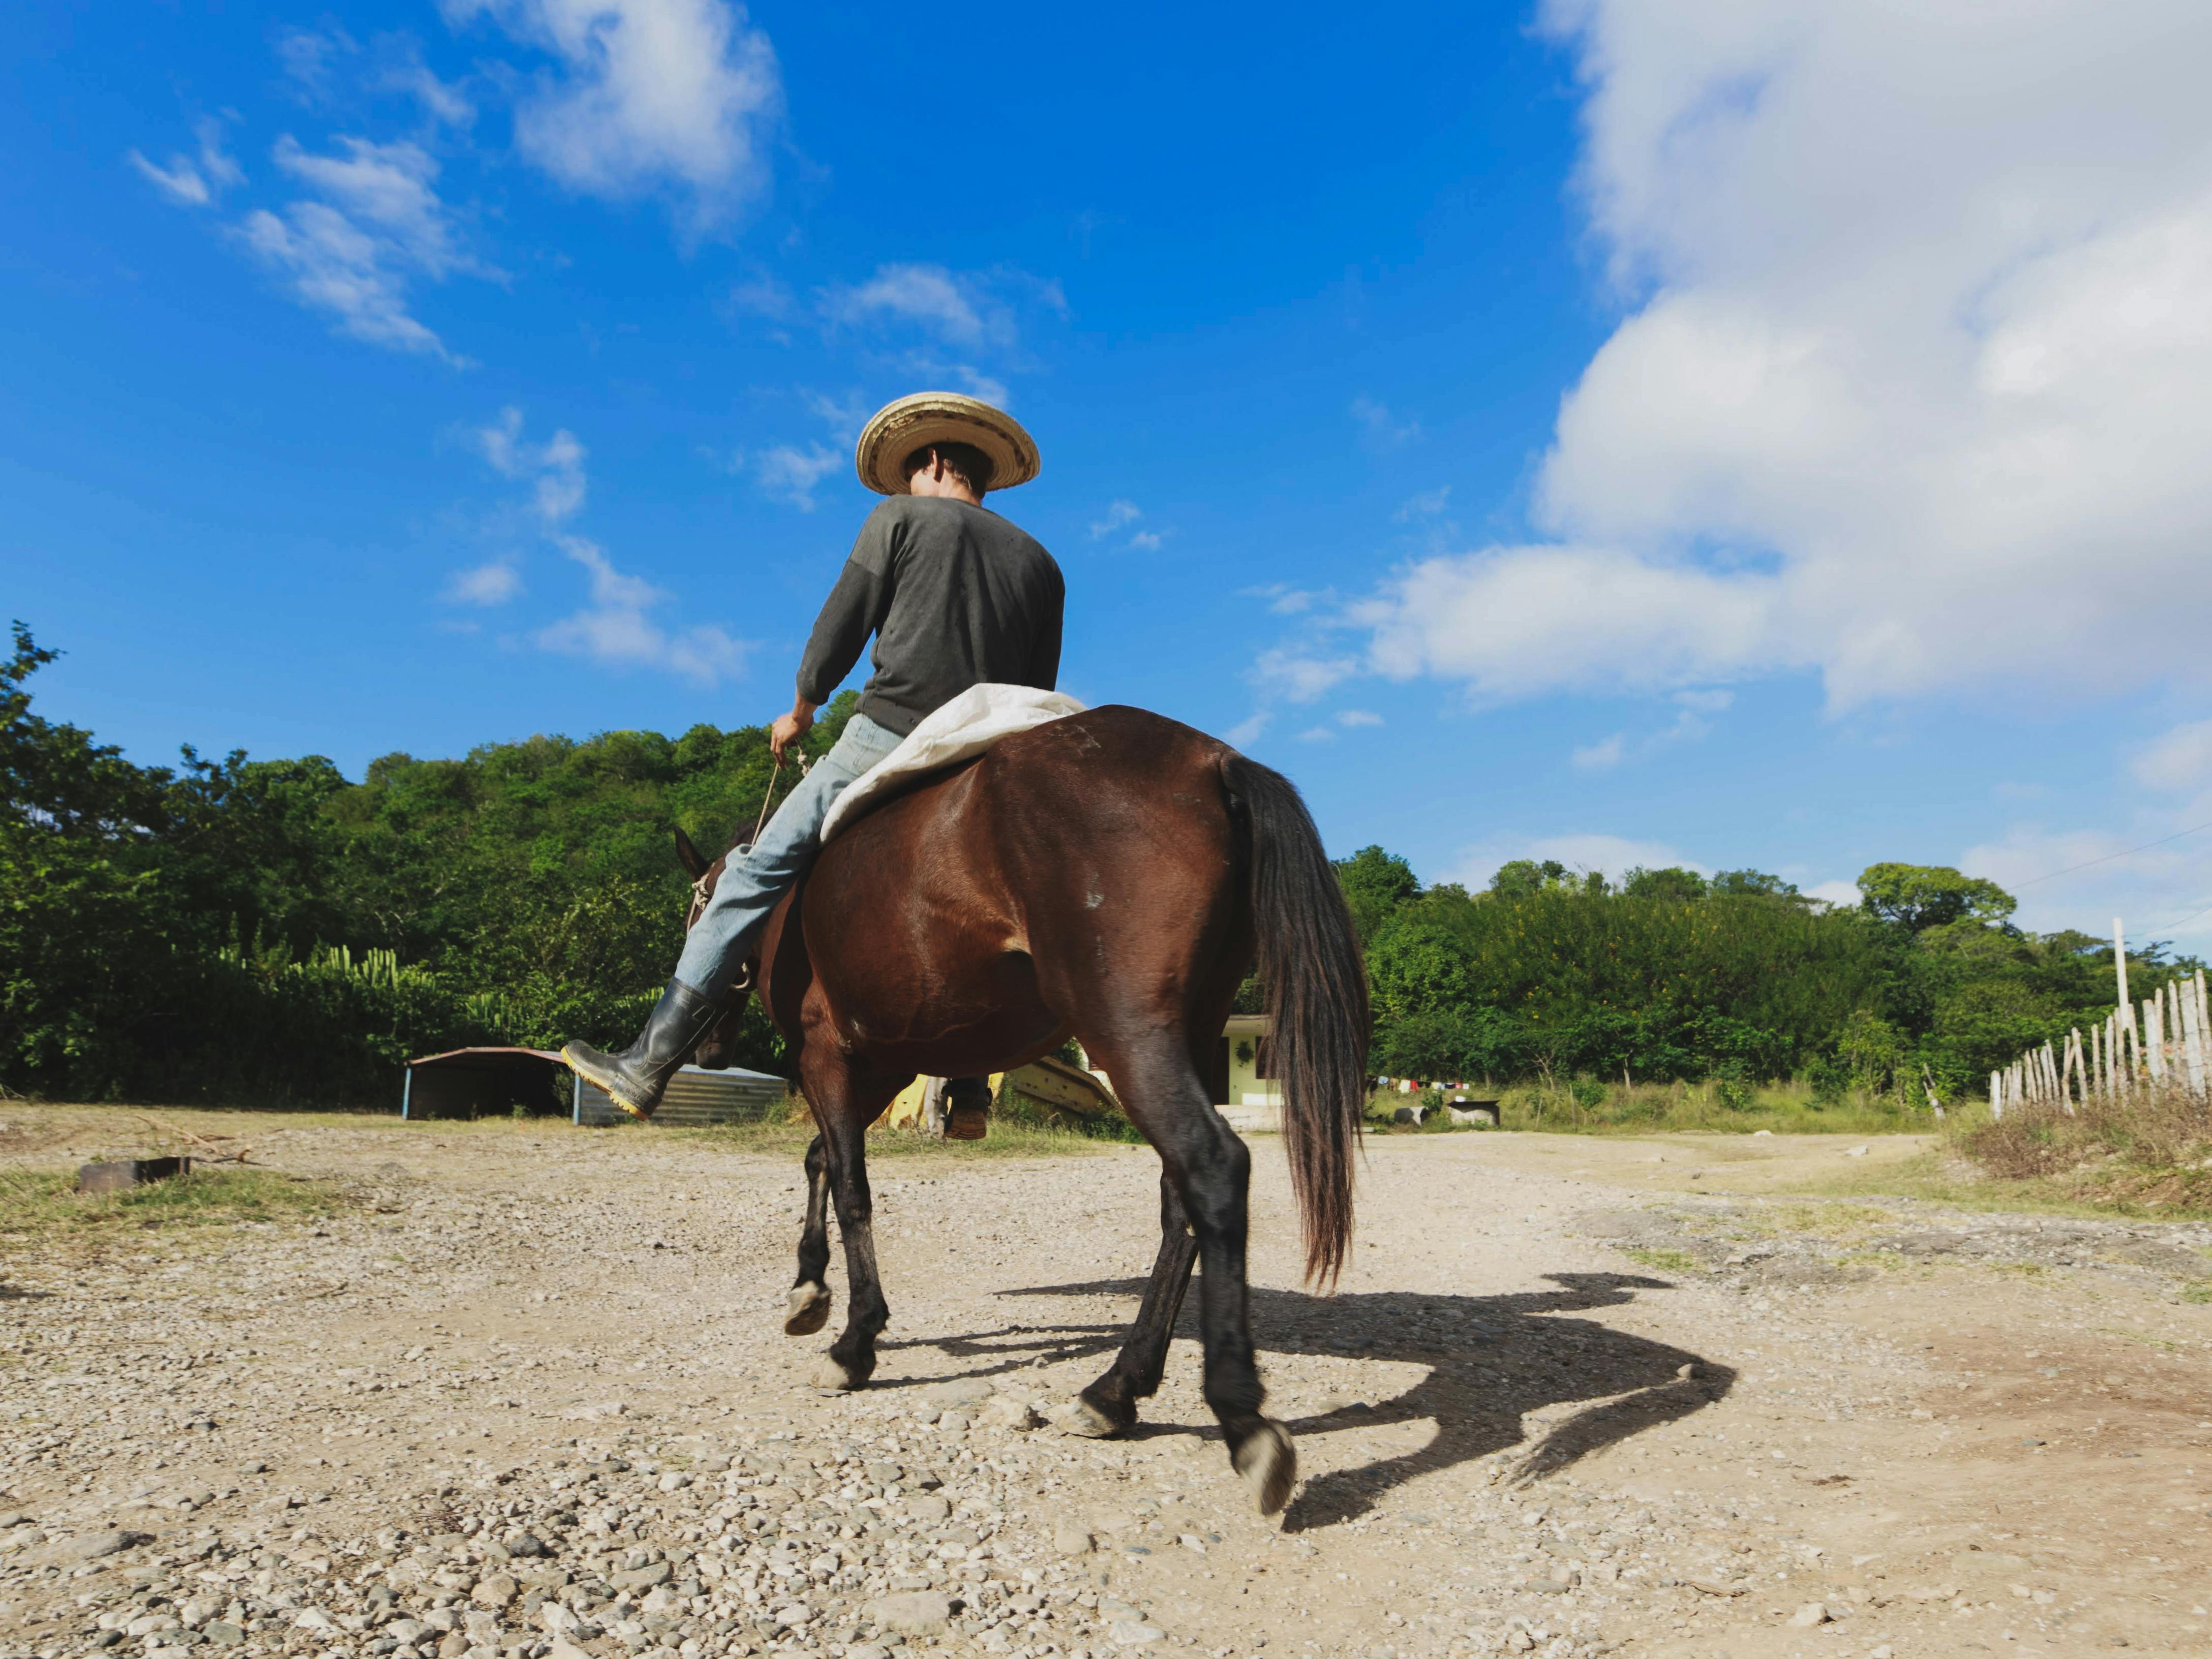 Cavalgando Cavalo Mostrar - Foto gratuita no Pixabay - Pixabay